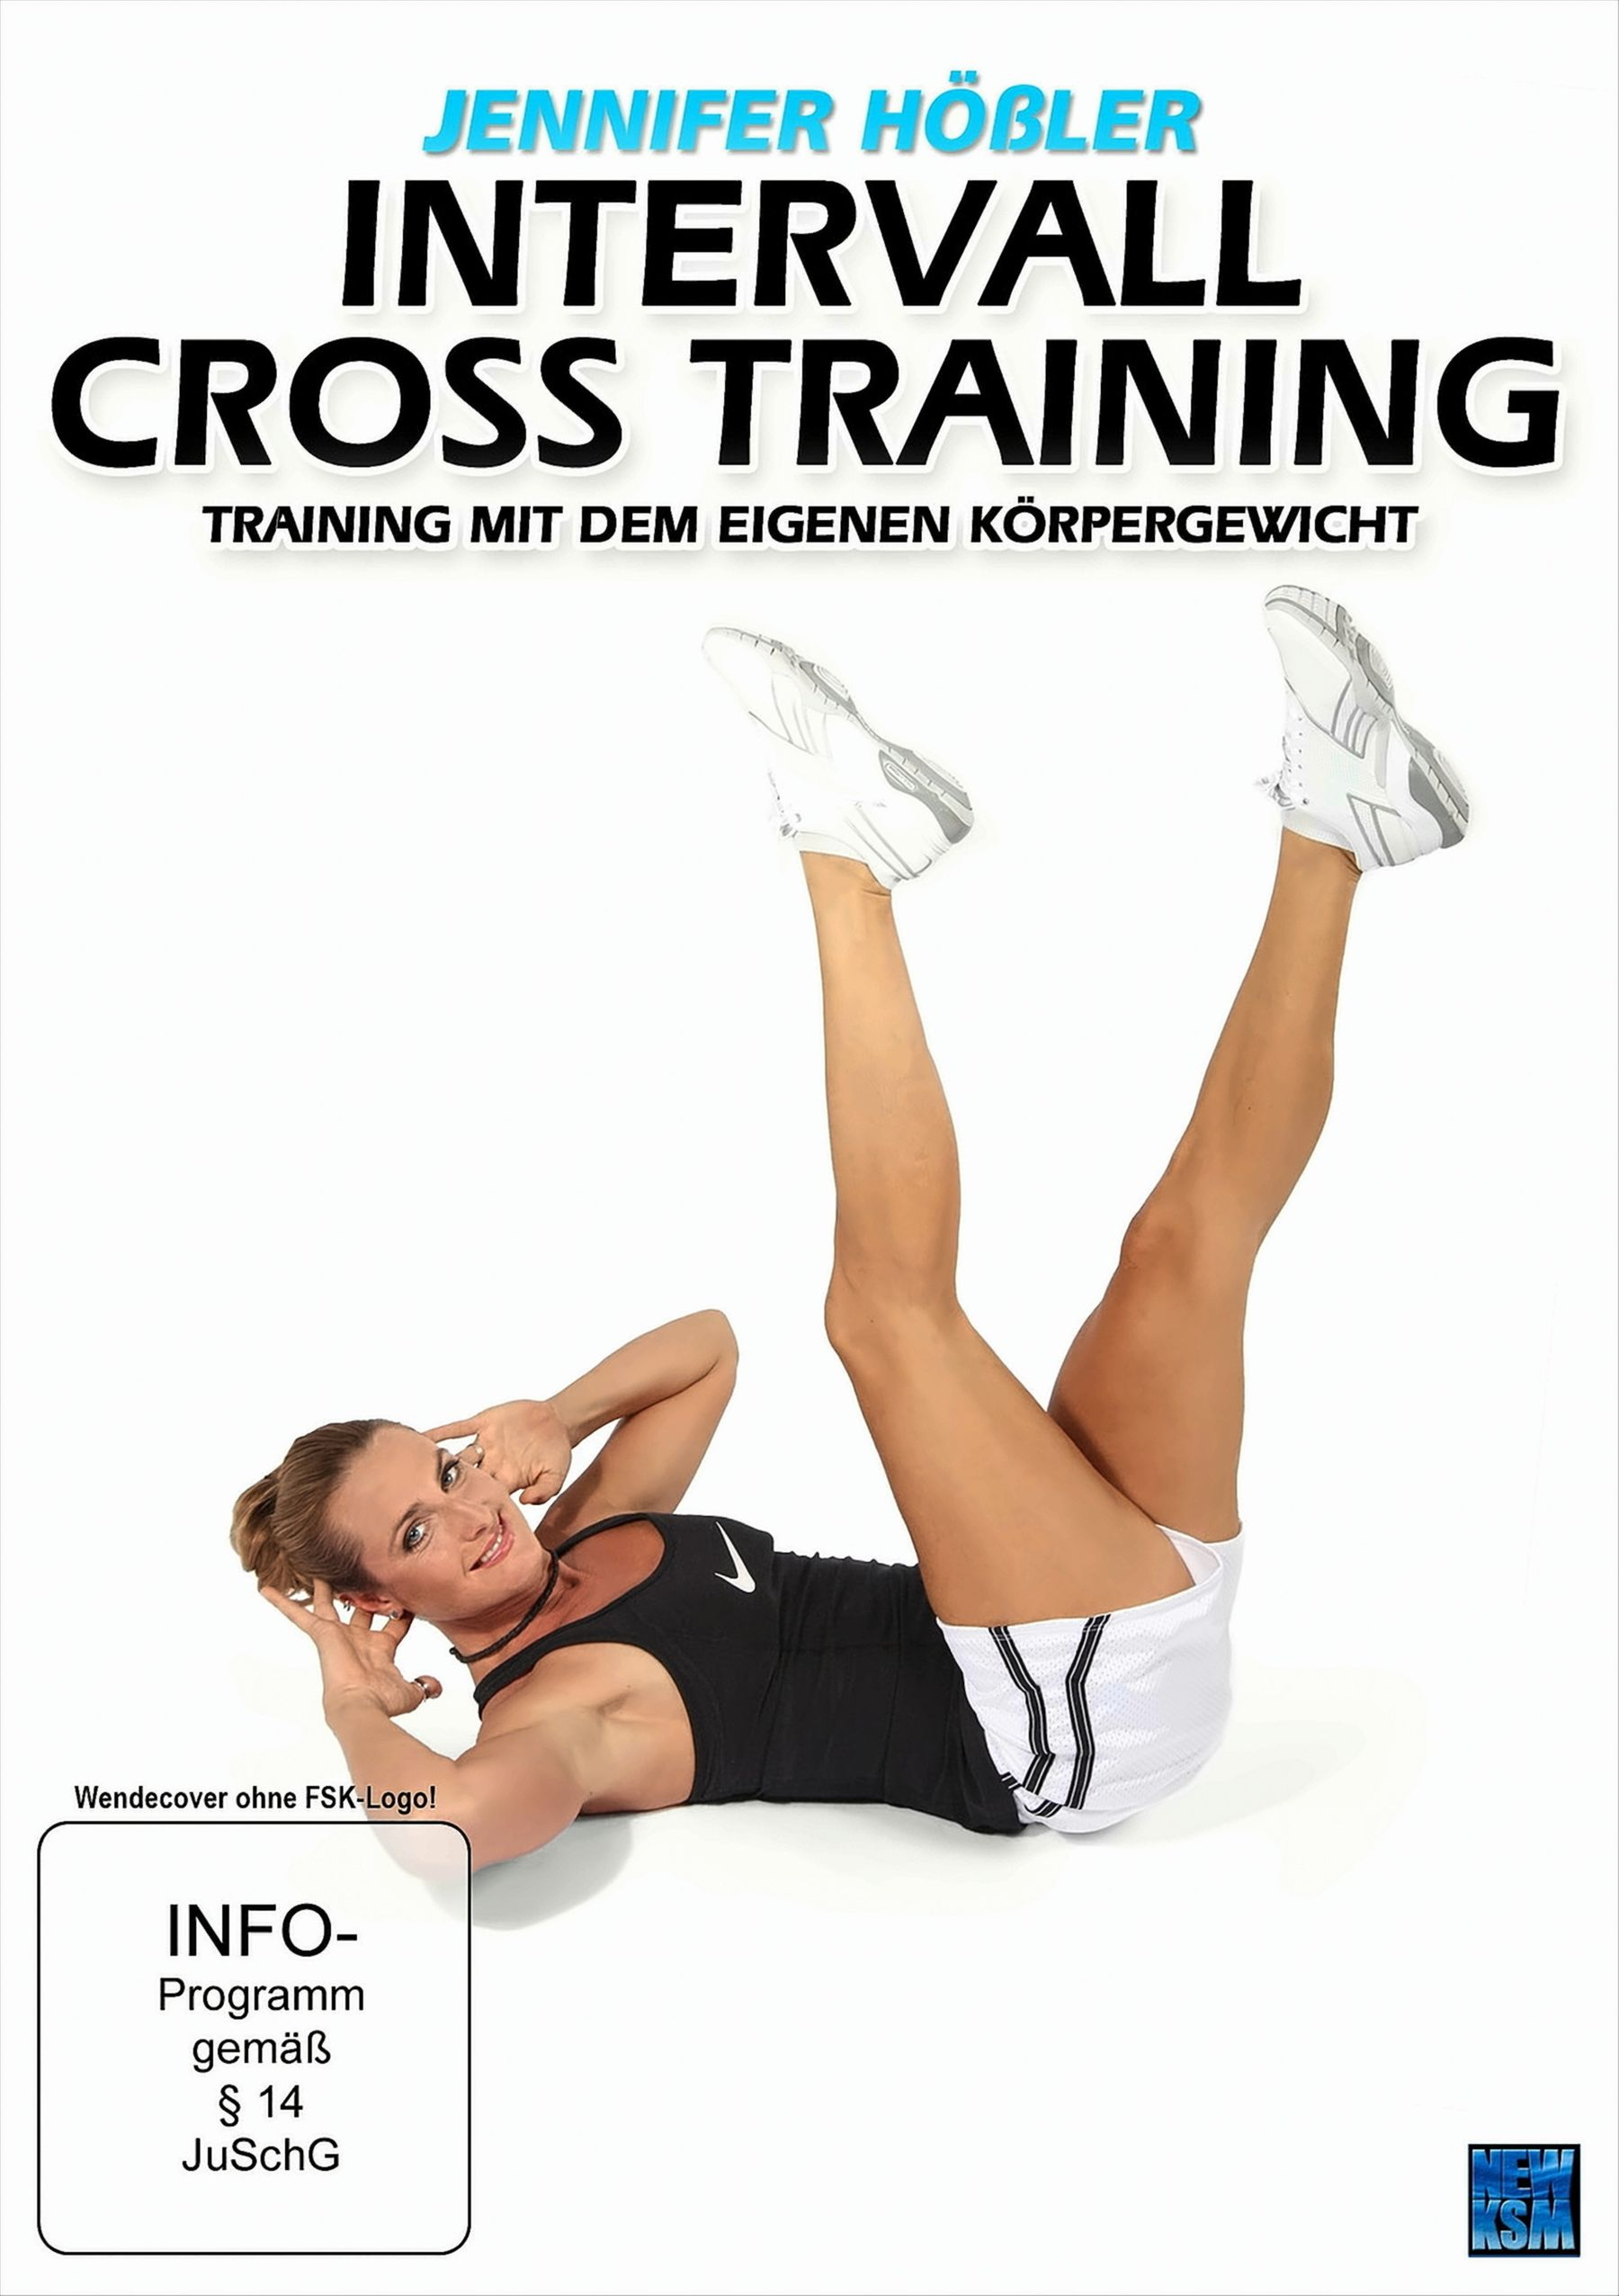 Jennifer Hößler - Training: mit DVD eigenen Training dem Intervall Körpergewicht Cross